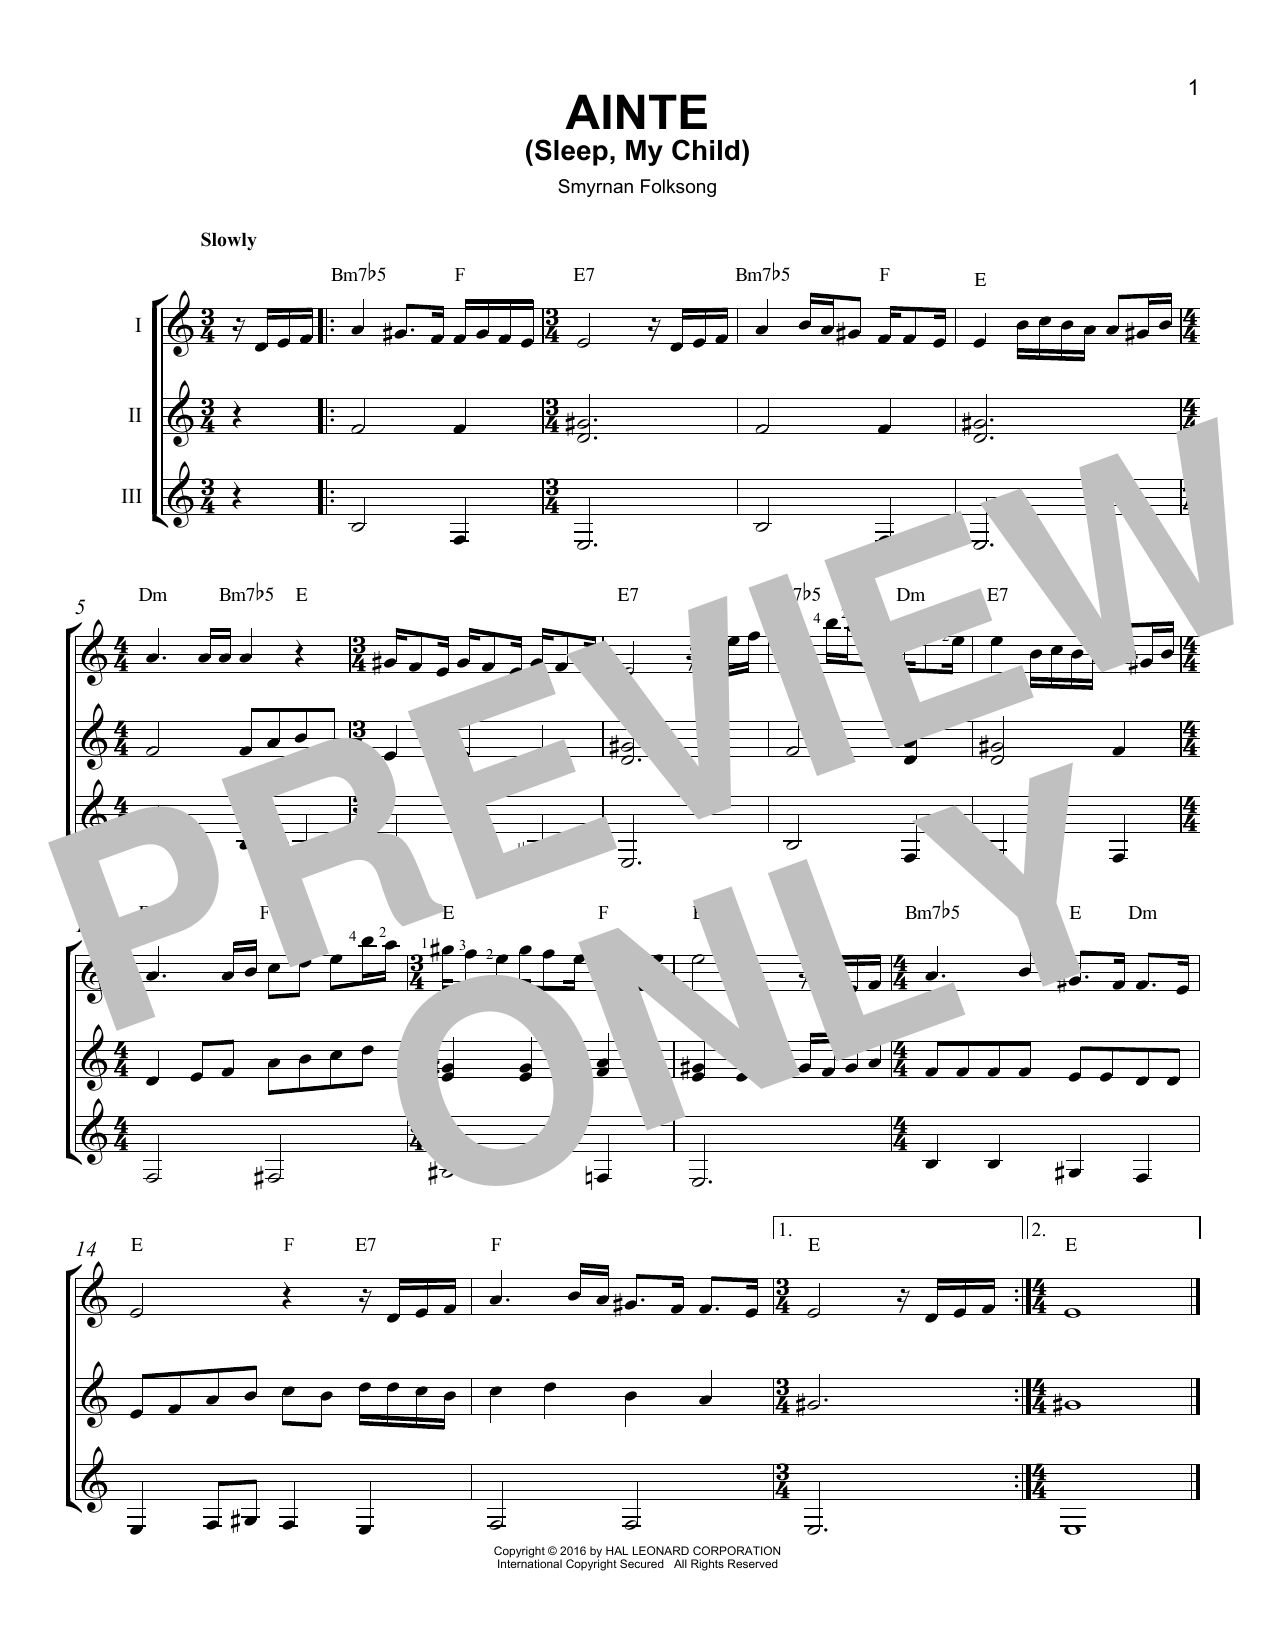 Smyrnan Folksong Ainte (Sleep, My Child) Sheet Music Notes & Chords for Guitar Ensemble - Download or Print PDF